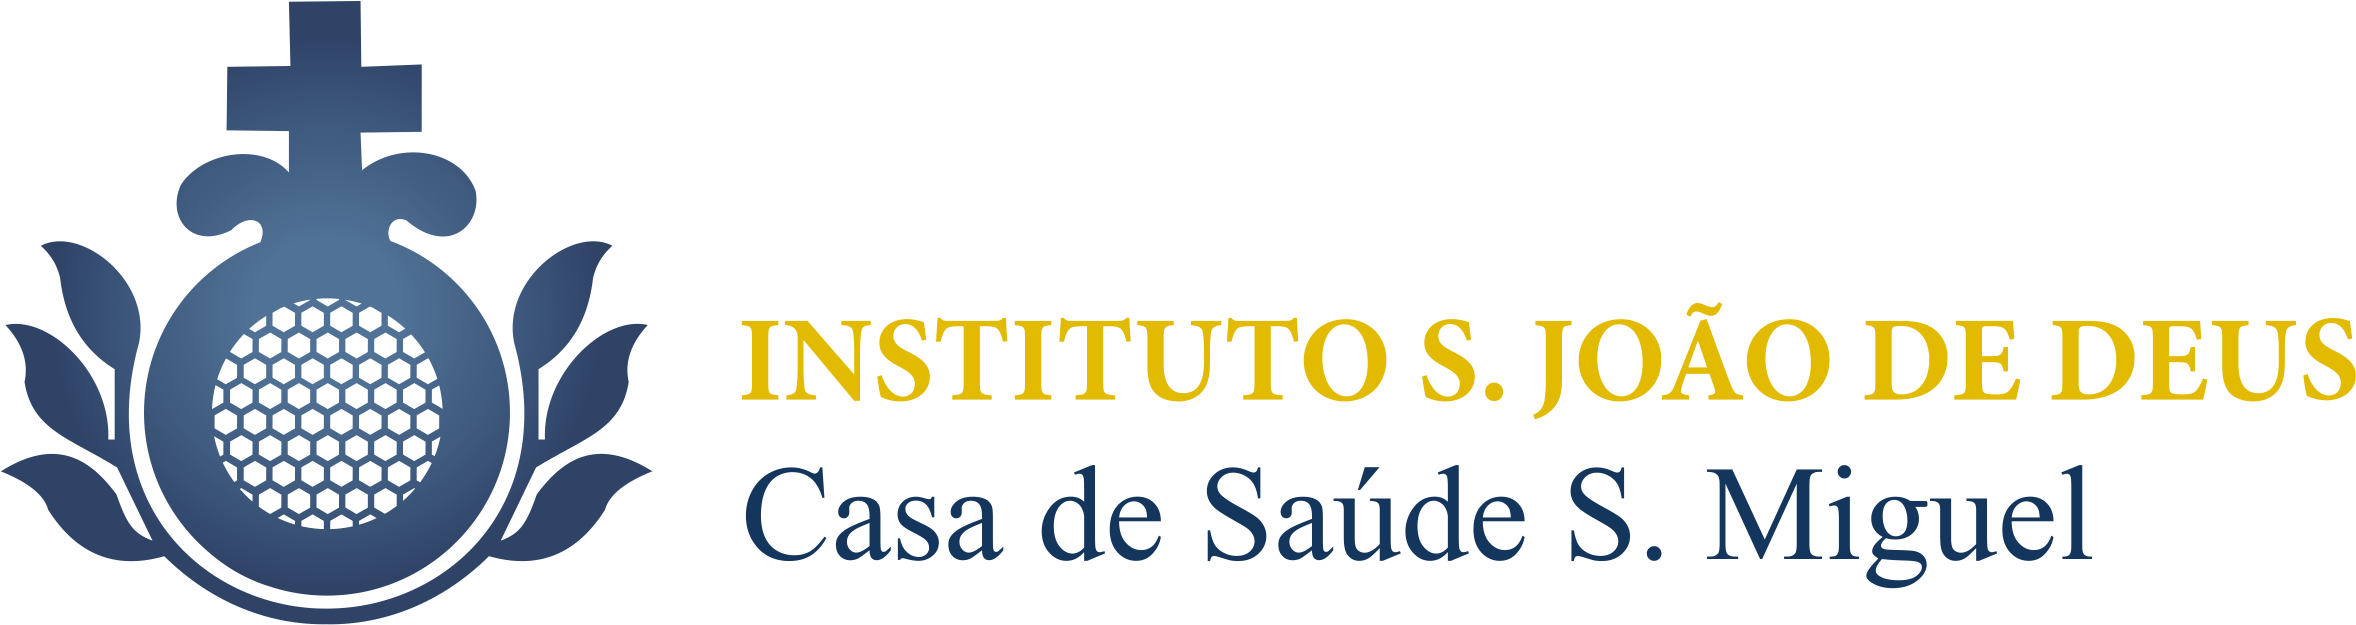 Instituto S. João de Deus - Casa de Saúde S. Miguel